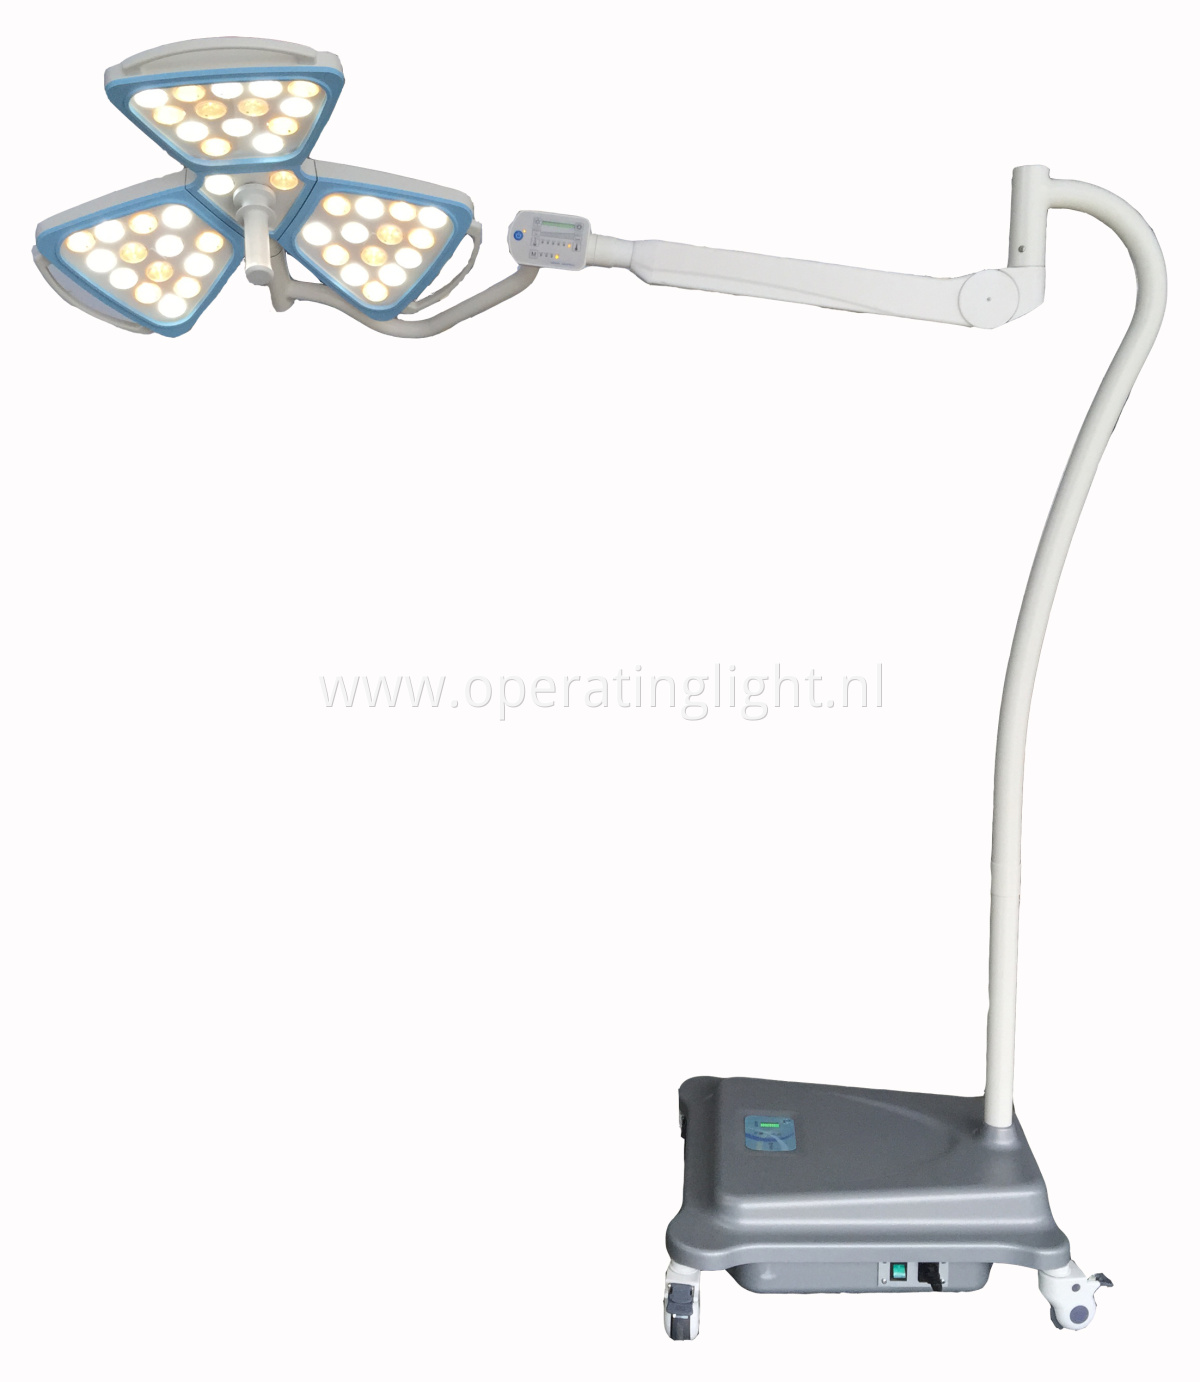 Mobile examination lamp